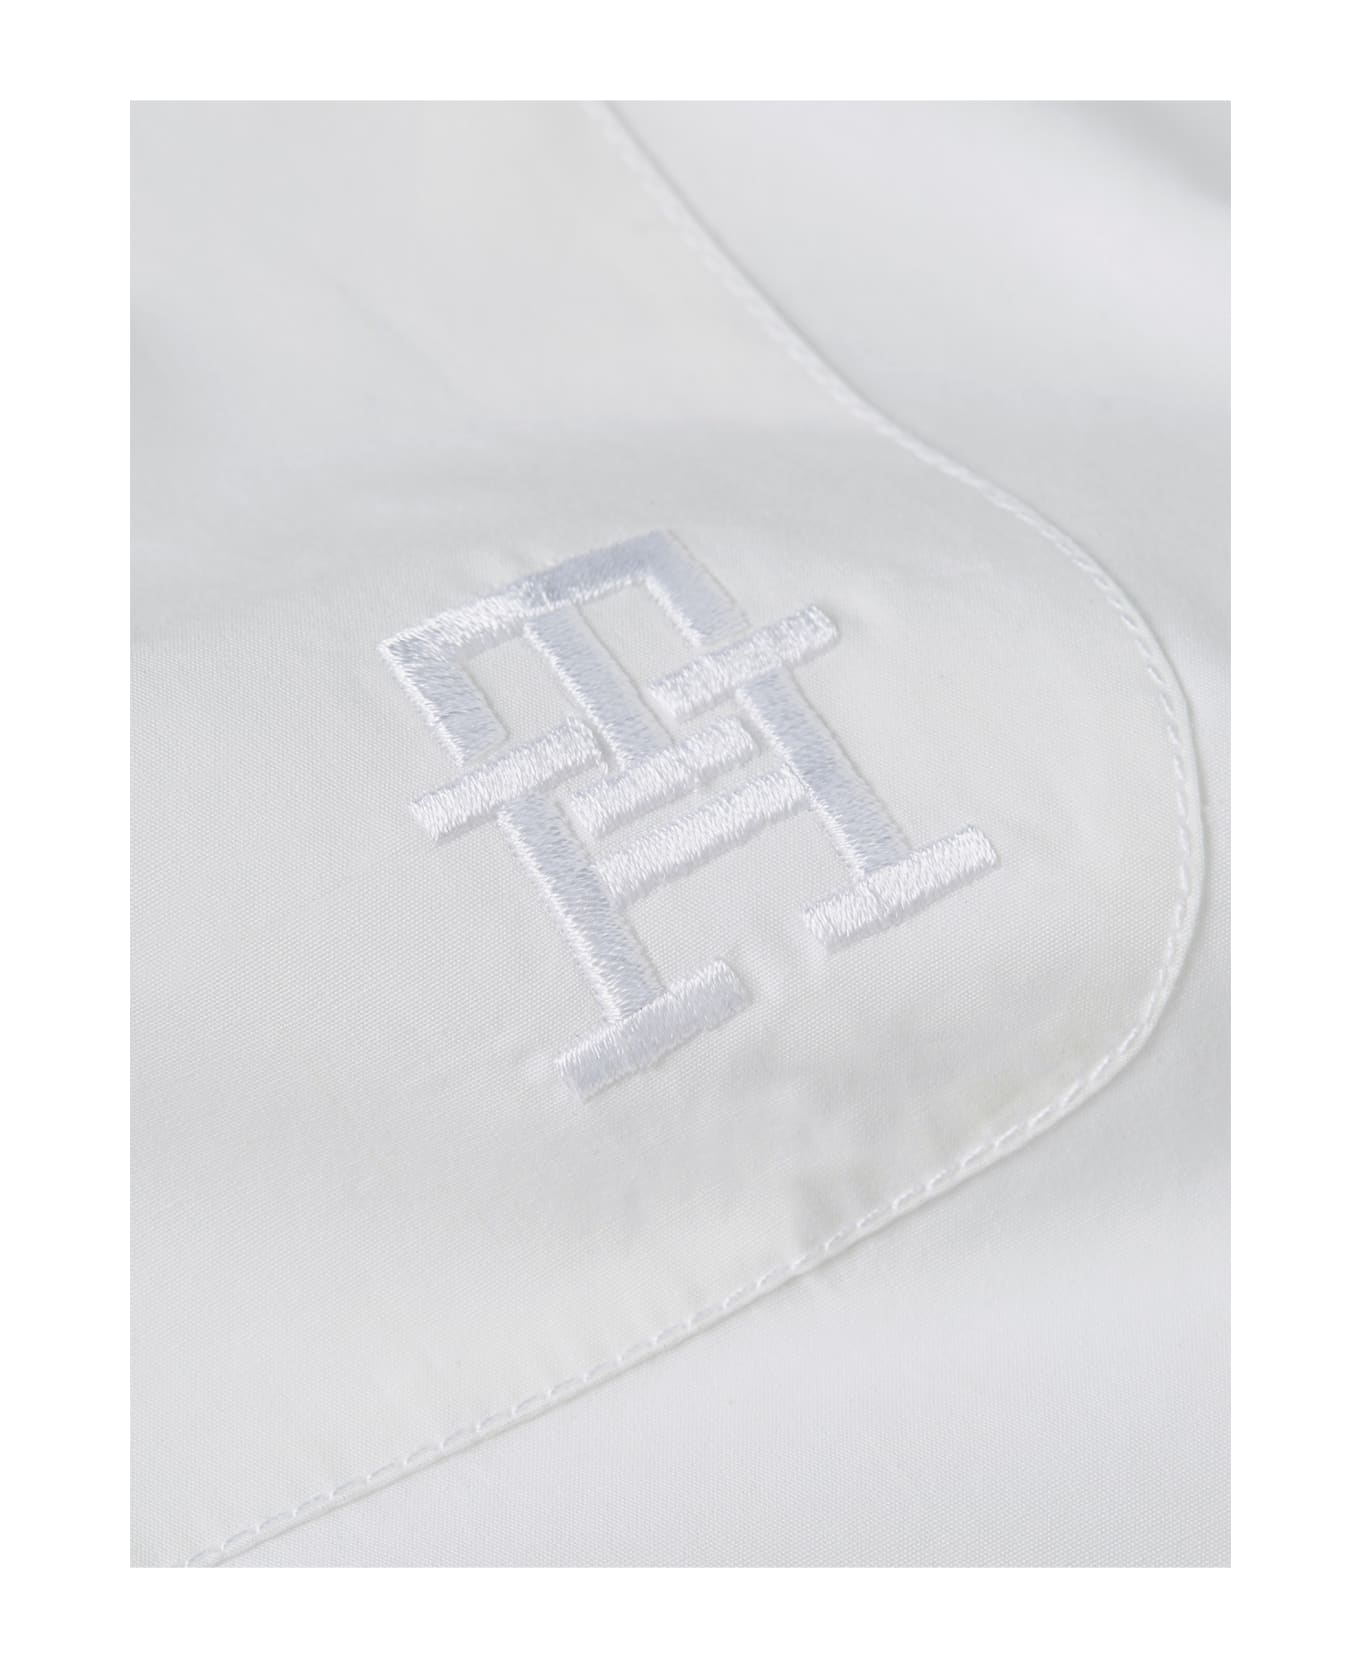 Tommy Hilfiger White Long-sleeved Shirt - OPTIC WHITE